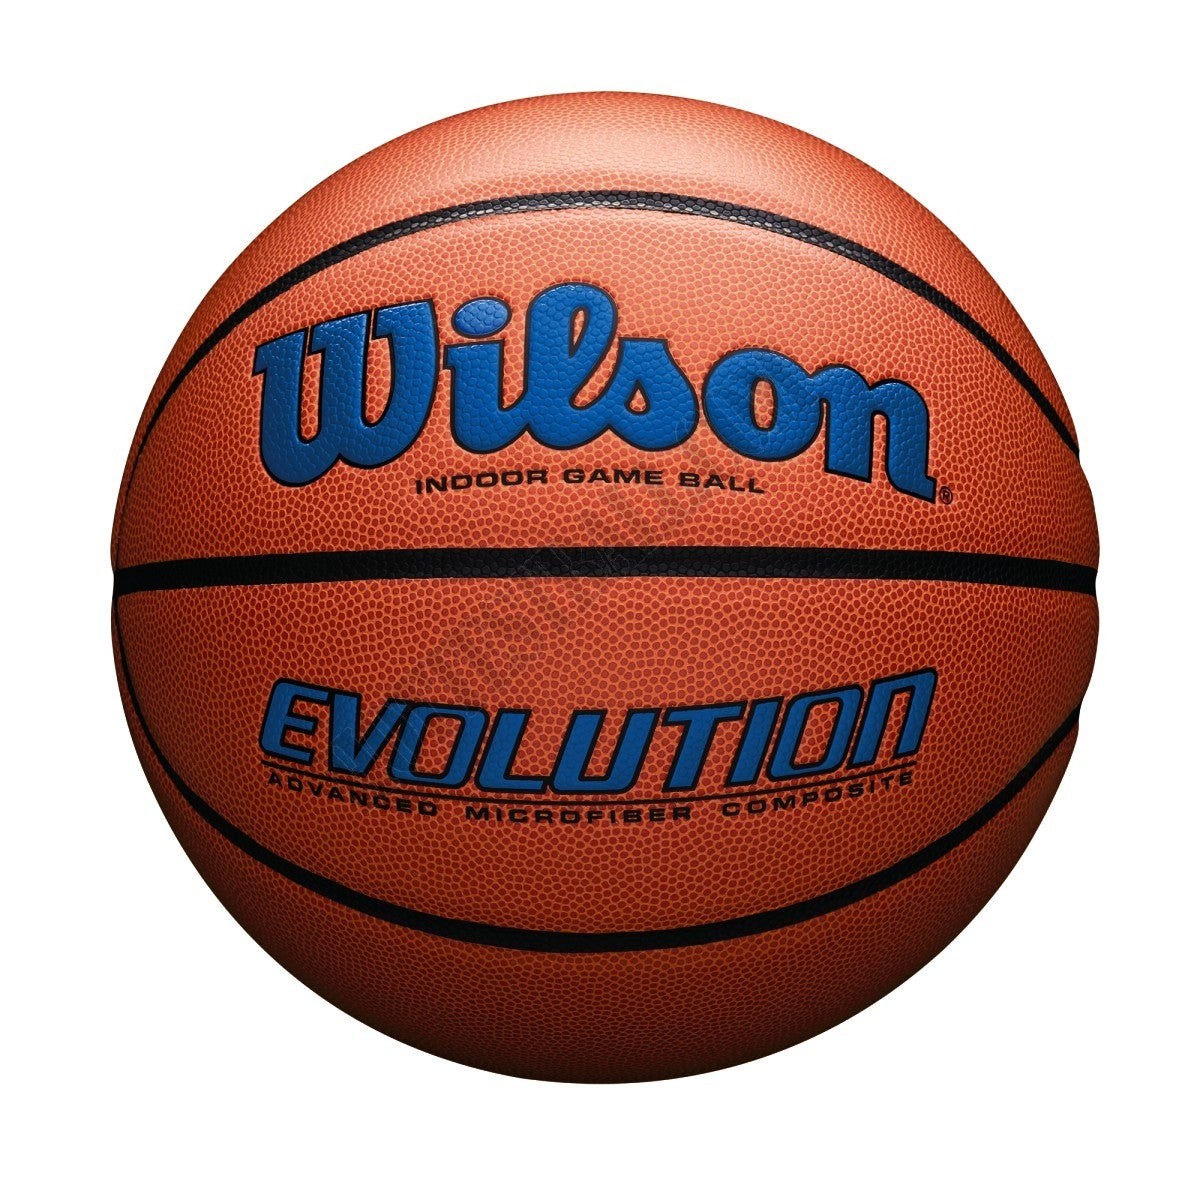 Evolution Game Basketball - Royal - Wilson Discount Store - Evolution Game Basketball - Royal - Wilson Discount Store